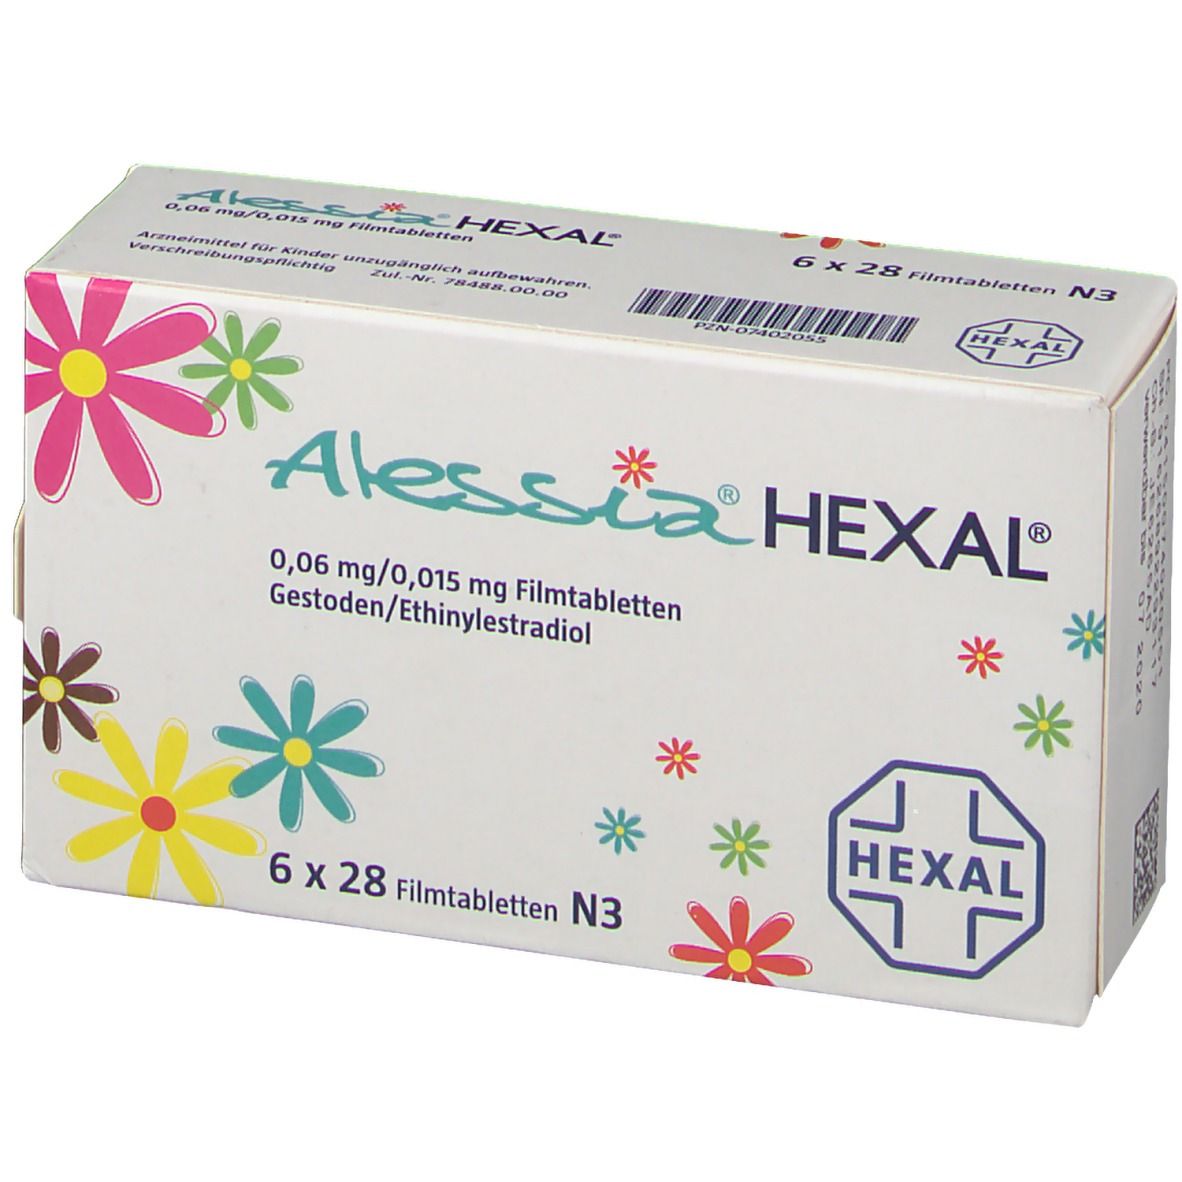 Alessia® HEXAL® 0,06 mg/0,015 mg